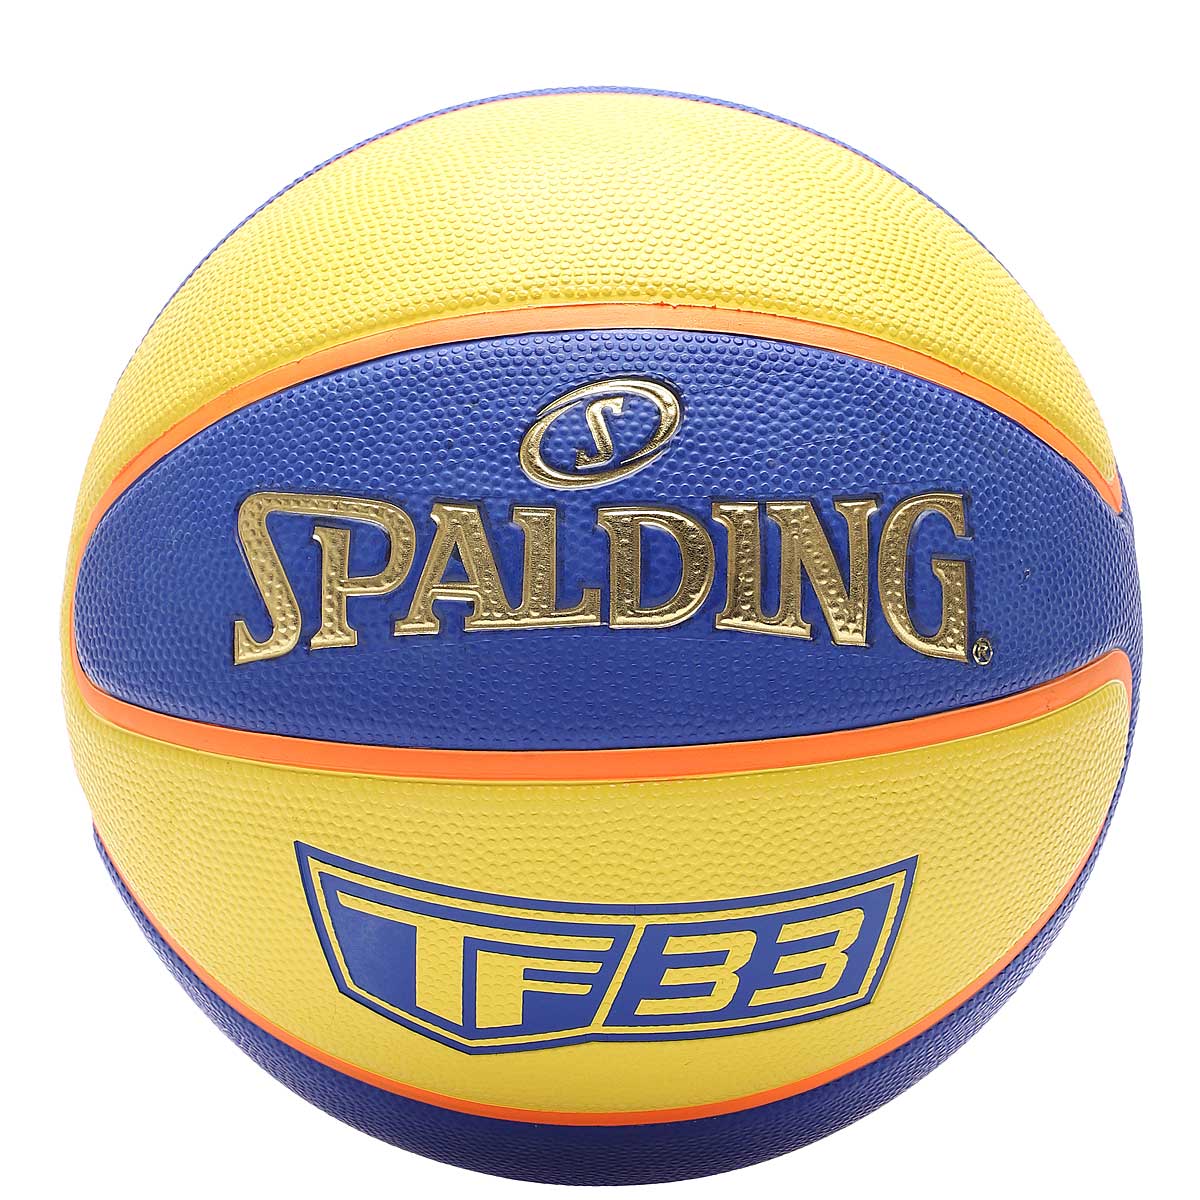 Image of Spalding Tf-33 Gold Fiba Rubber Basketball, Blue/yellow